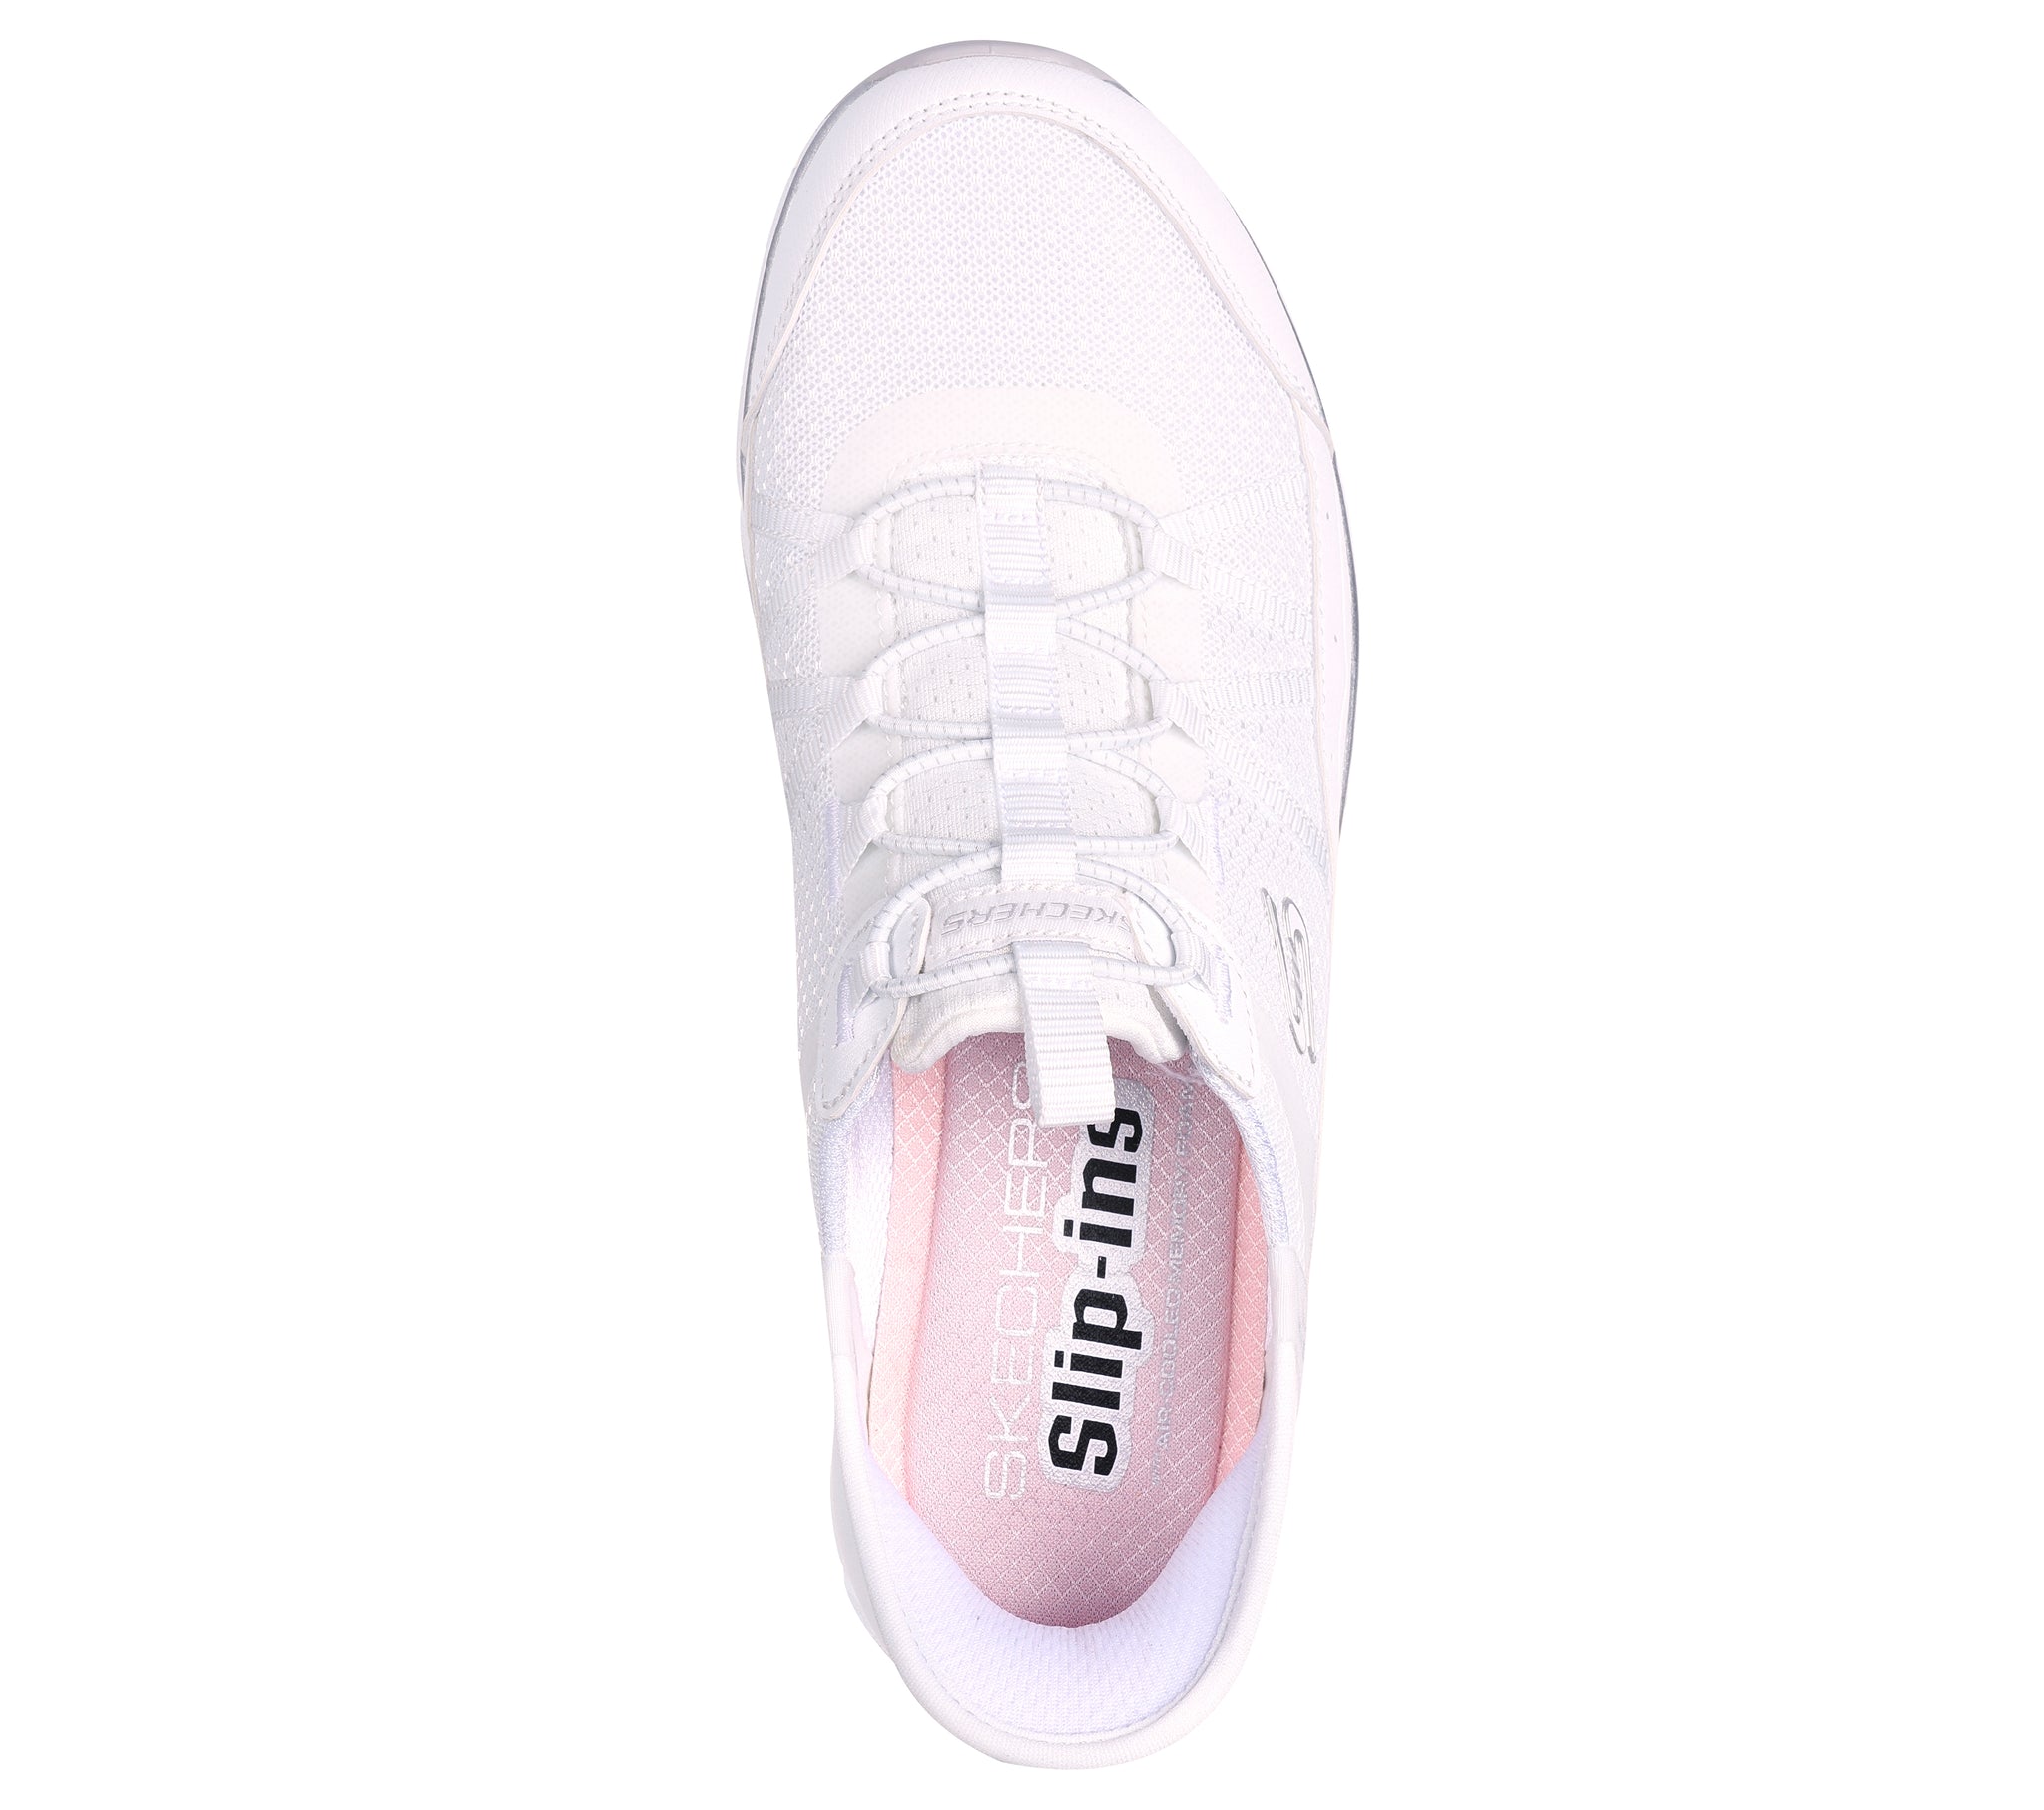 Skechers Women's shoes LEISURELY 104289 #104289$BBK.02SK Online